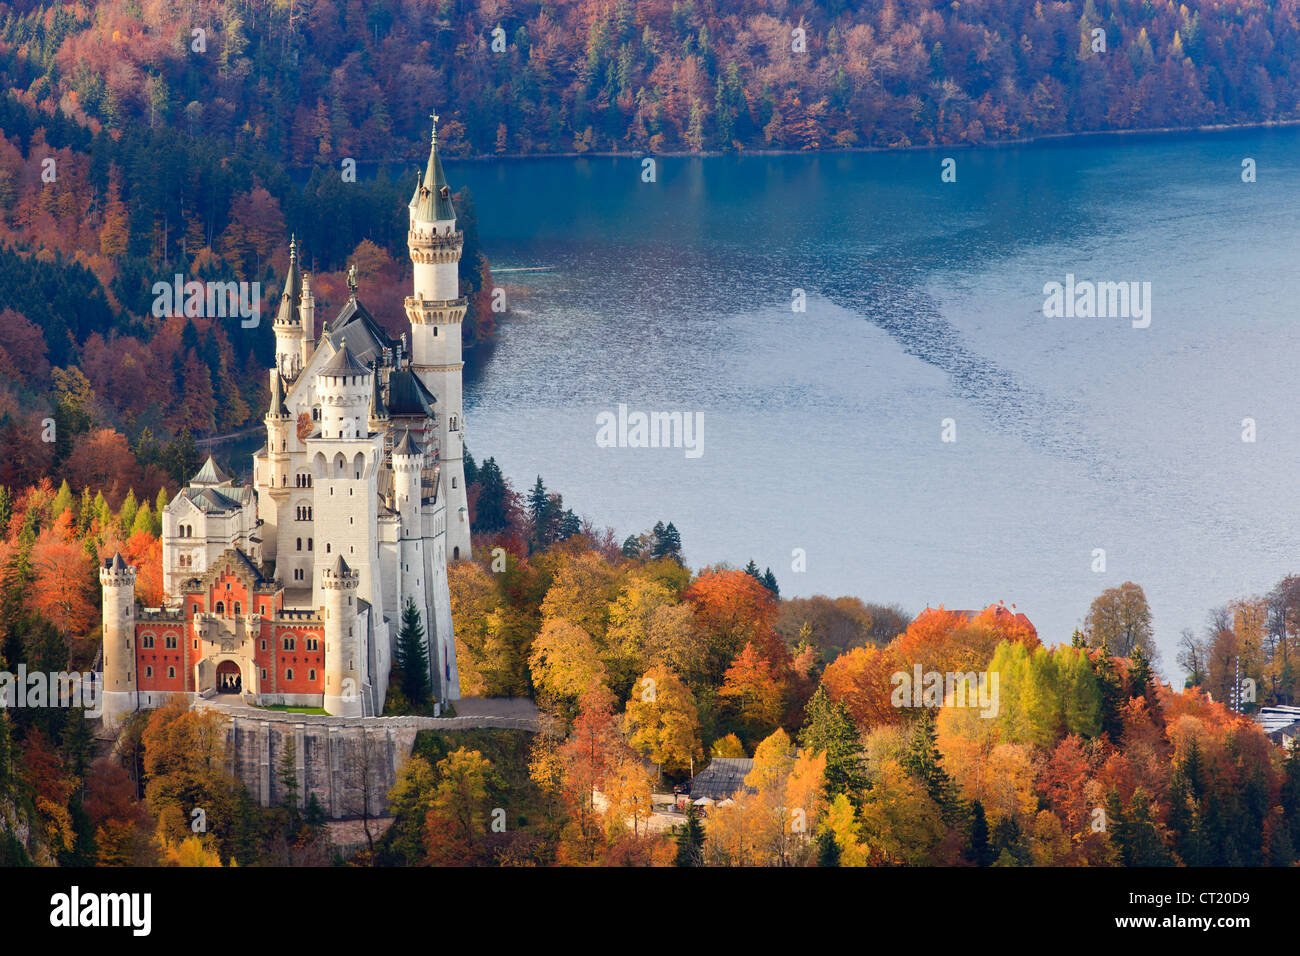 Neuschwanstein Castle In Autumn Colours Allgau Bavaria Germany Stock